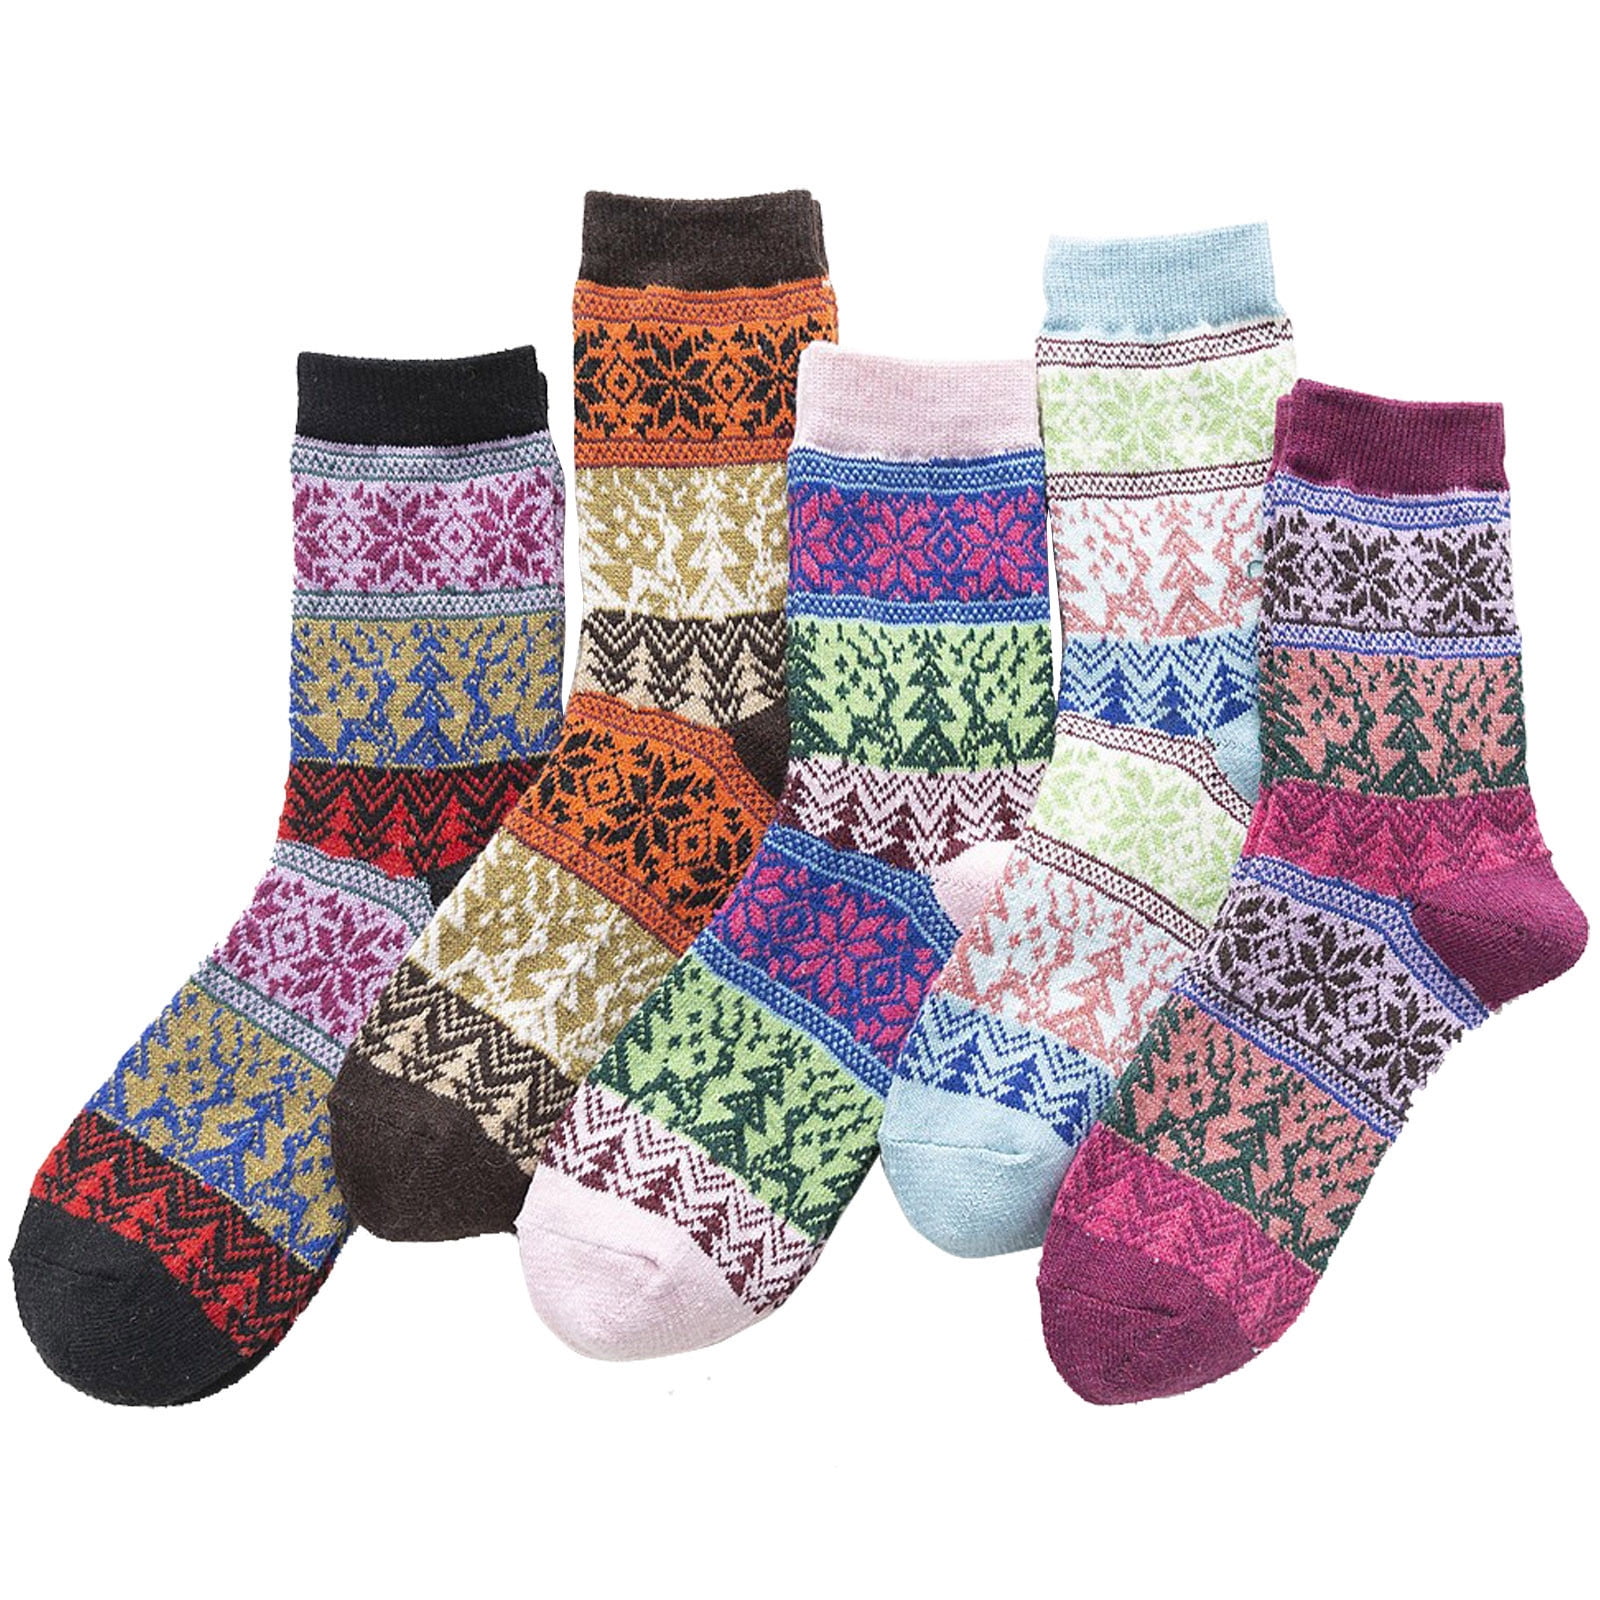 5 x Women’s Wool Socks Warm Rabbit Blended Luxury Everyday Christmas gift 